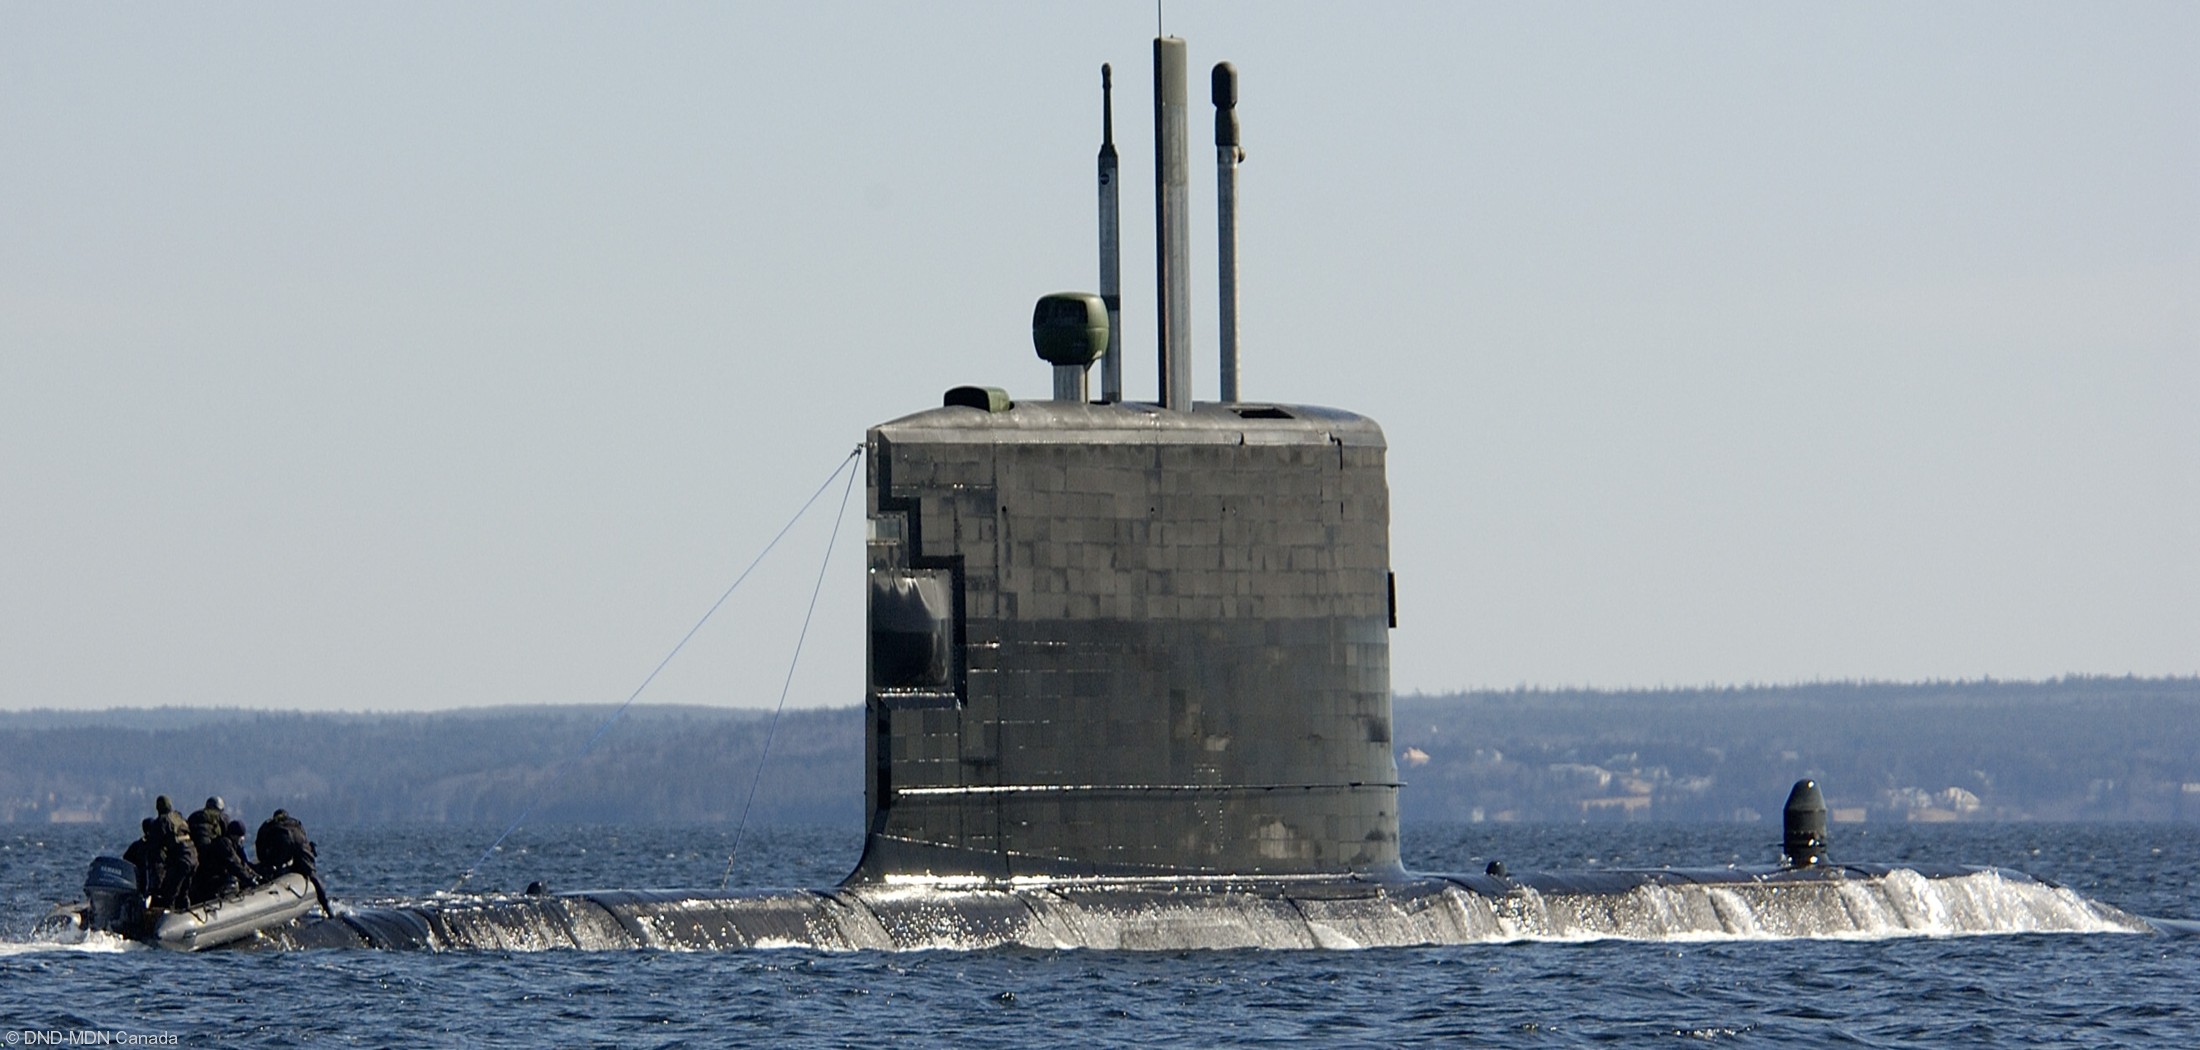 ssk-877 hmcs windsor victoria upholder class attack submarine hunter killer ncsm royal canadian navy 09